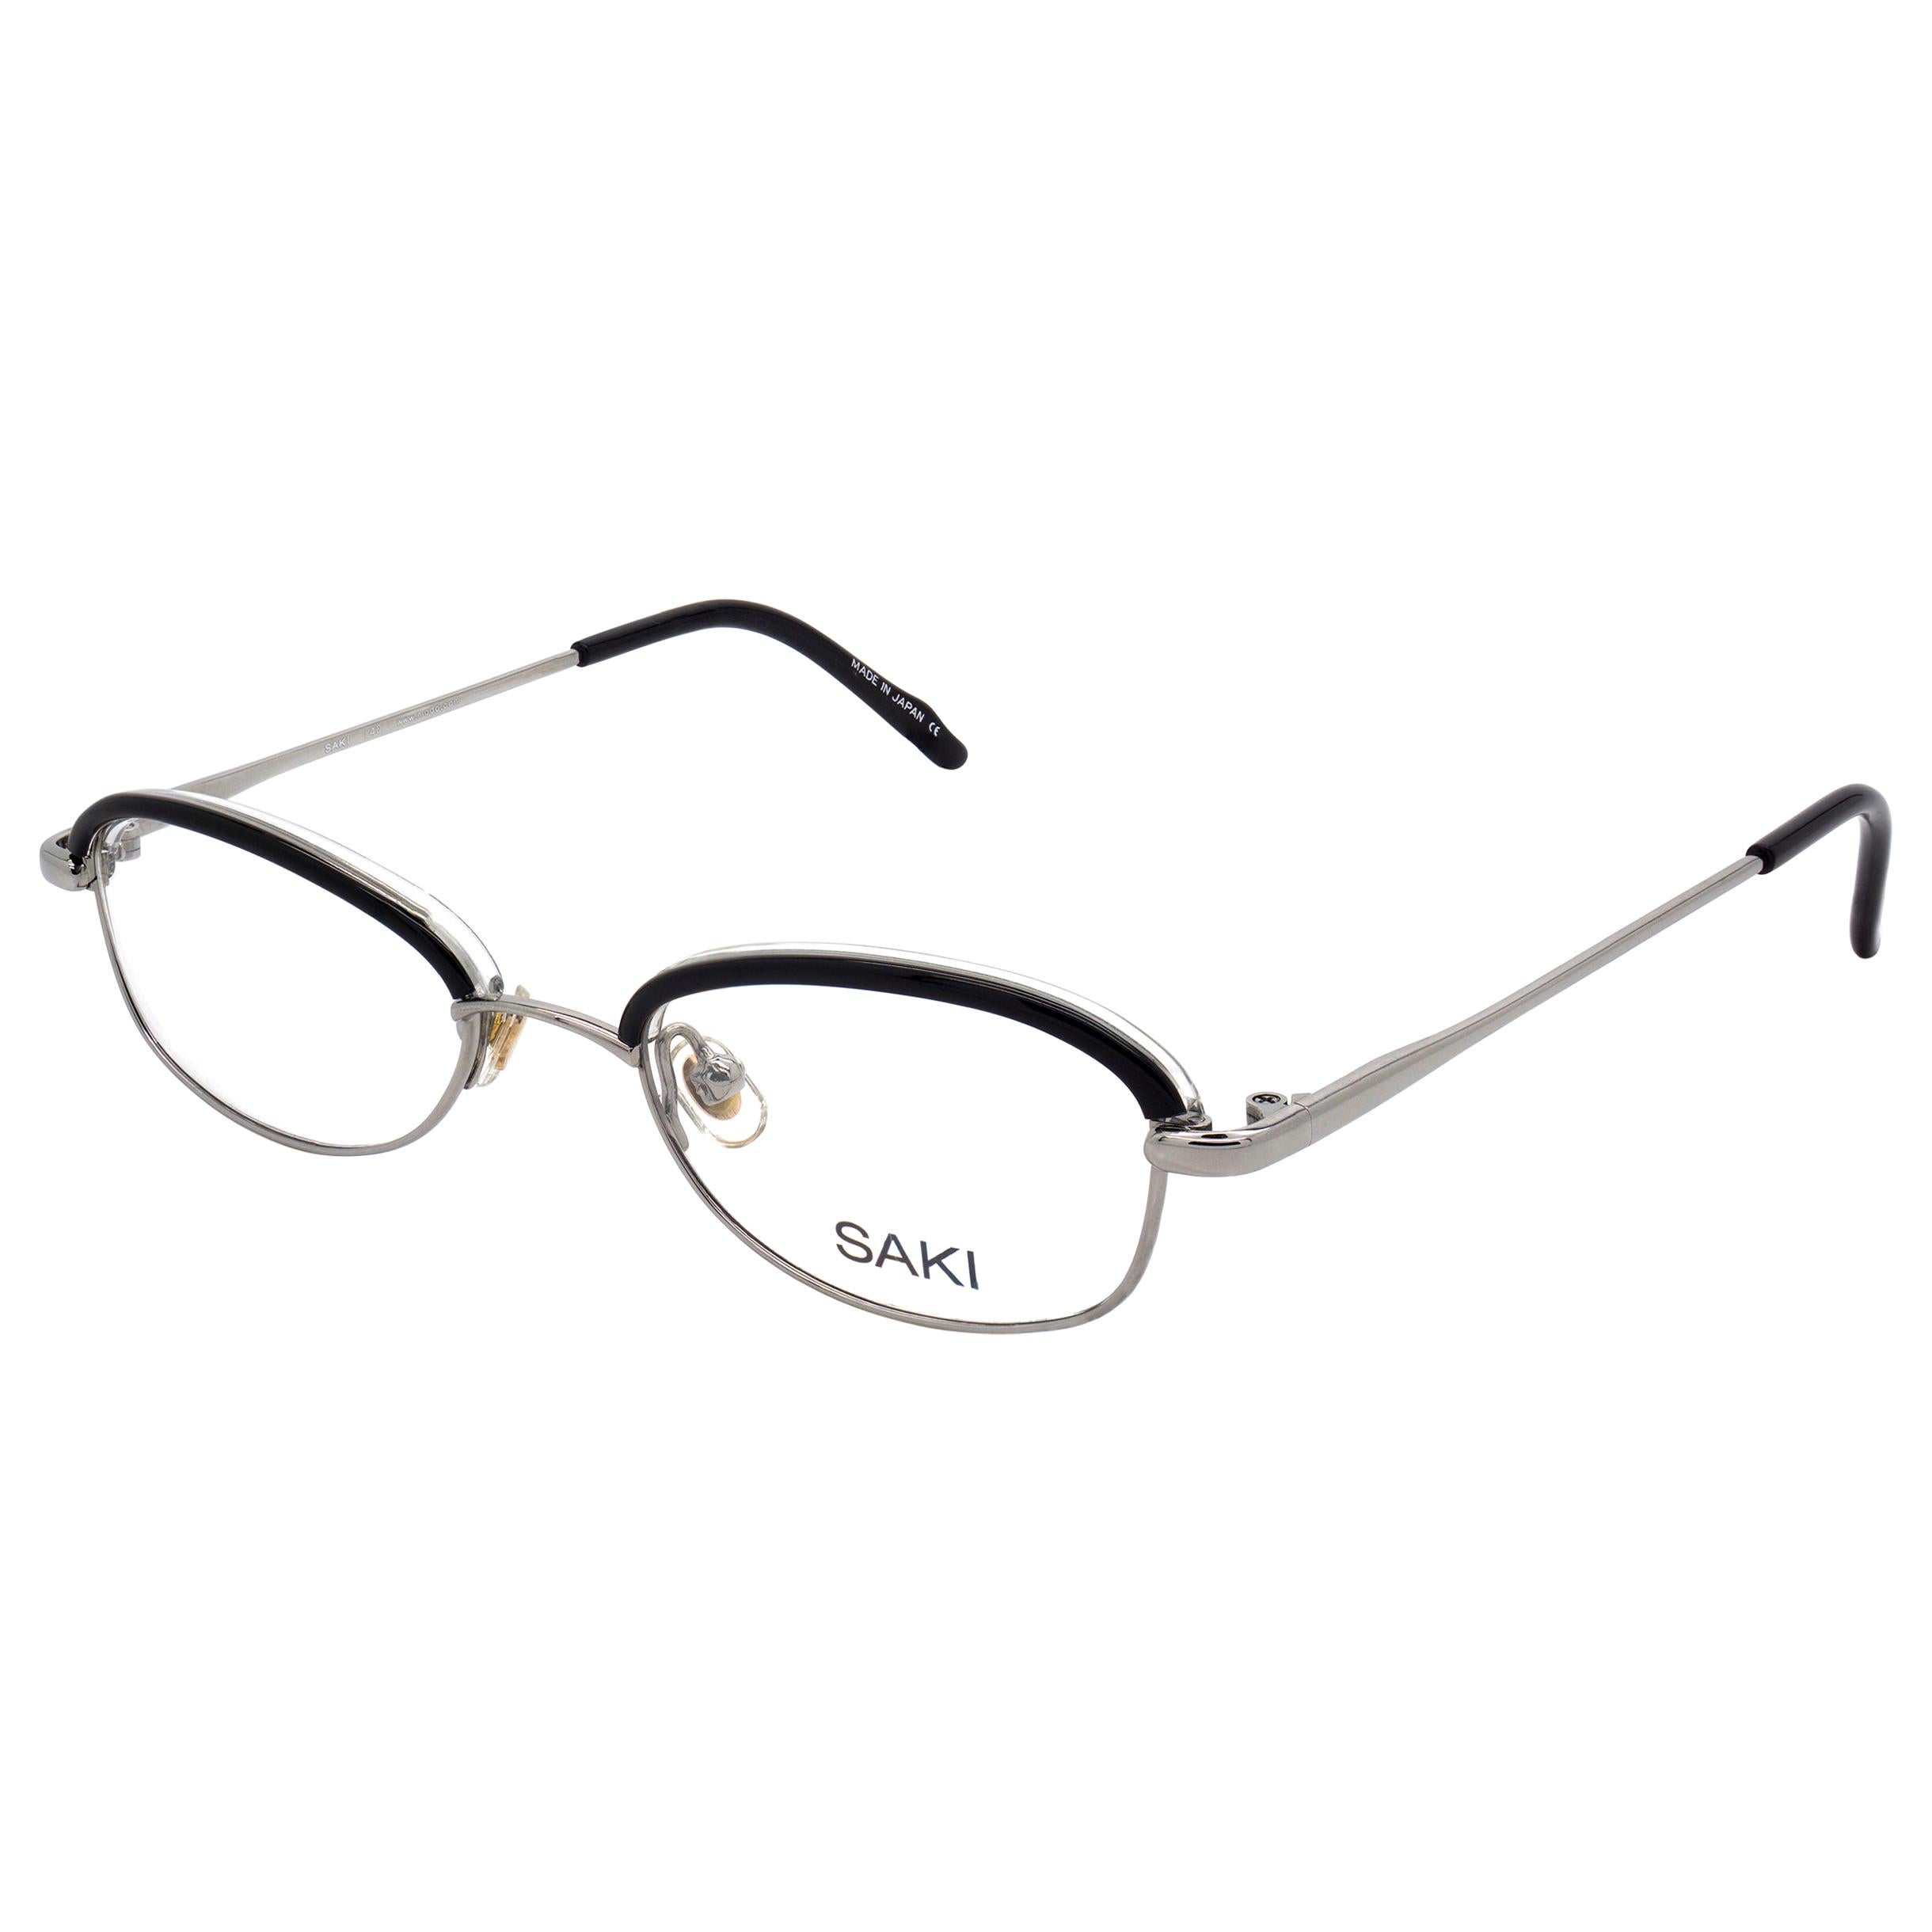 Japan Saki vintage eyeglasses frame